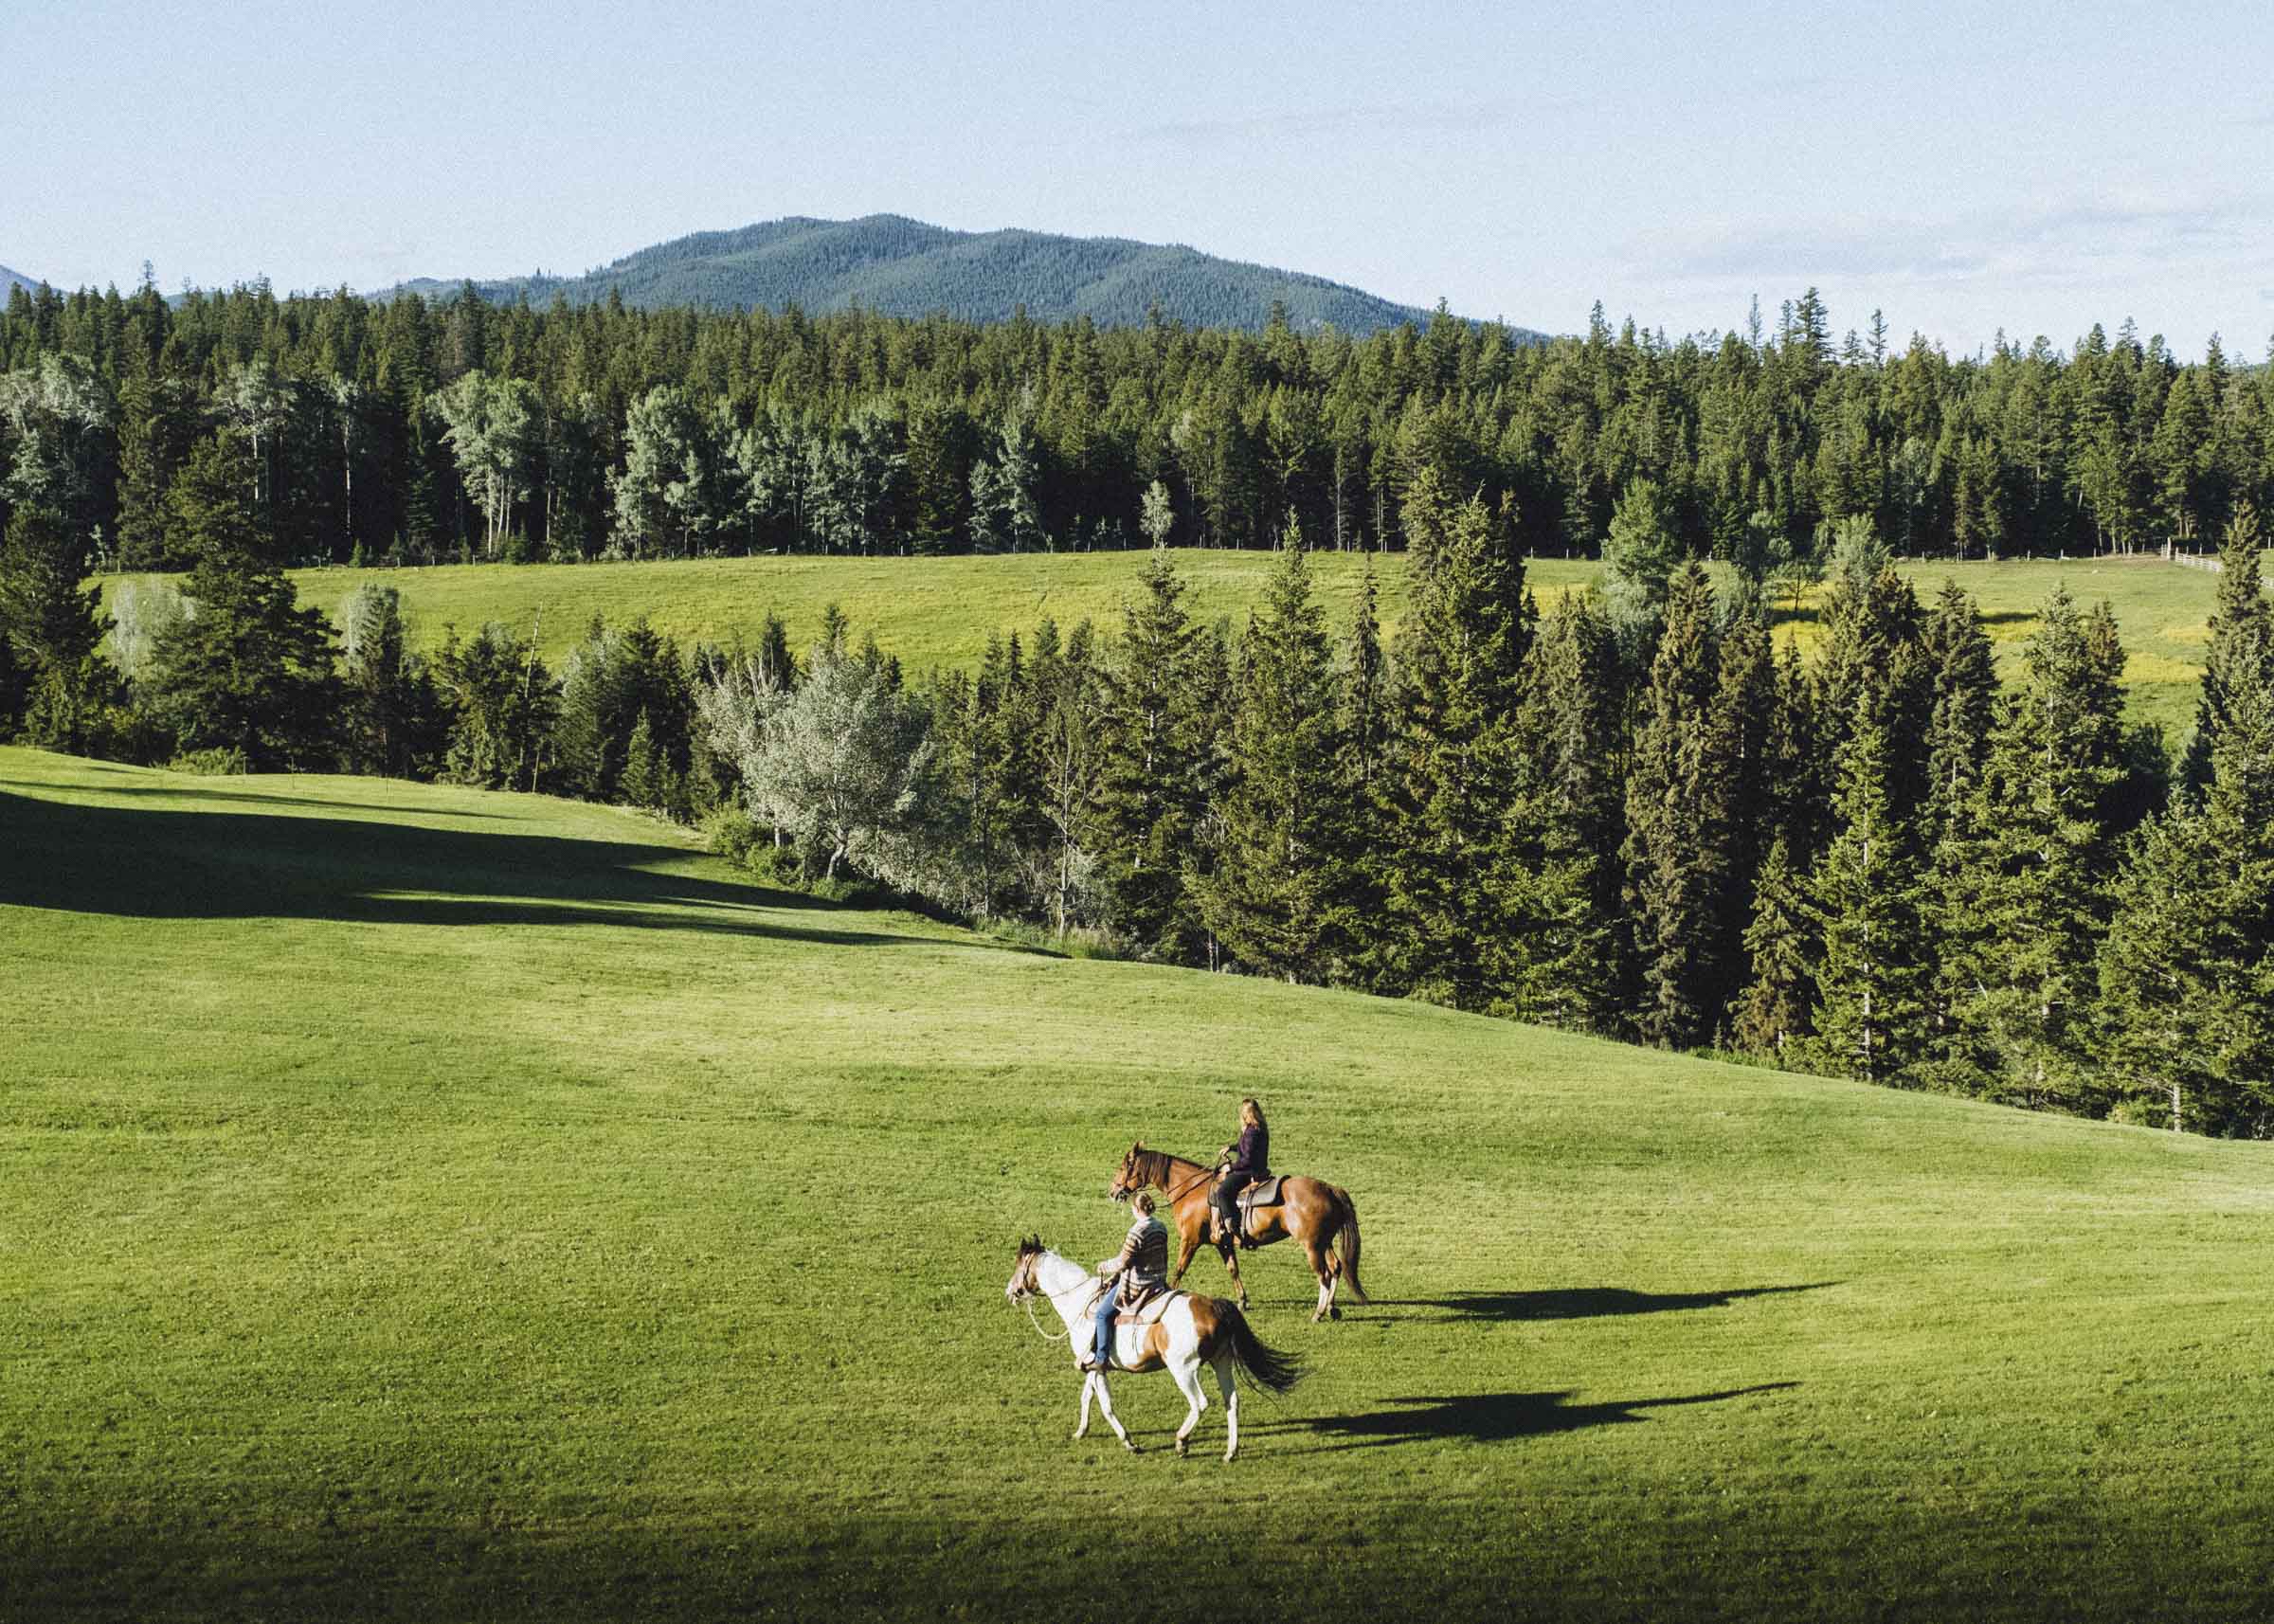 Riding horses through the vast Cariboo landscapes